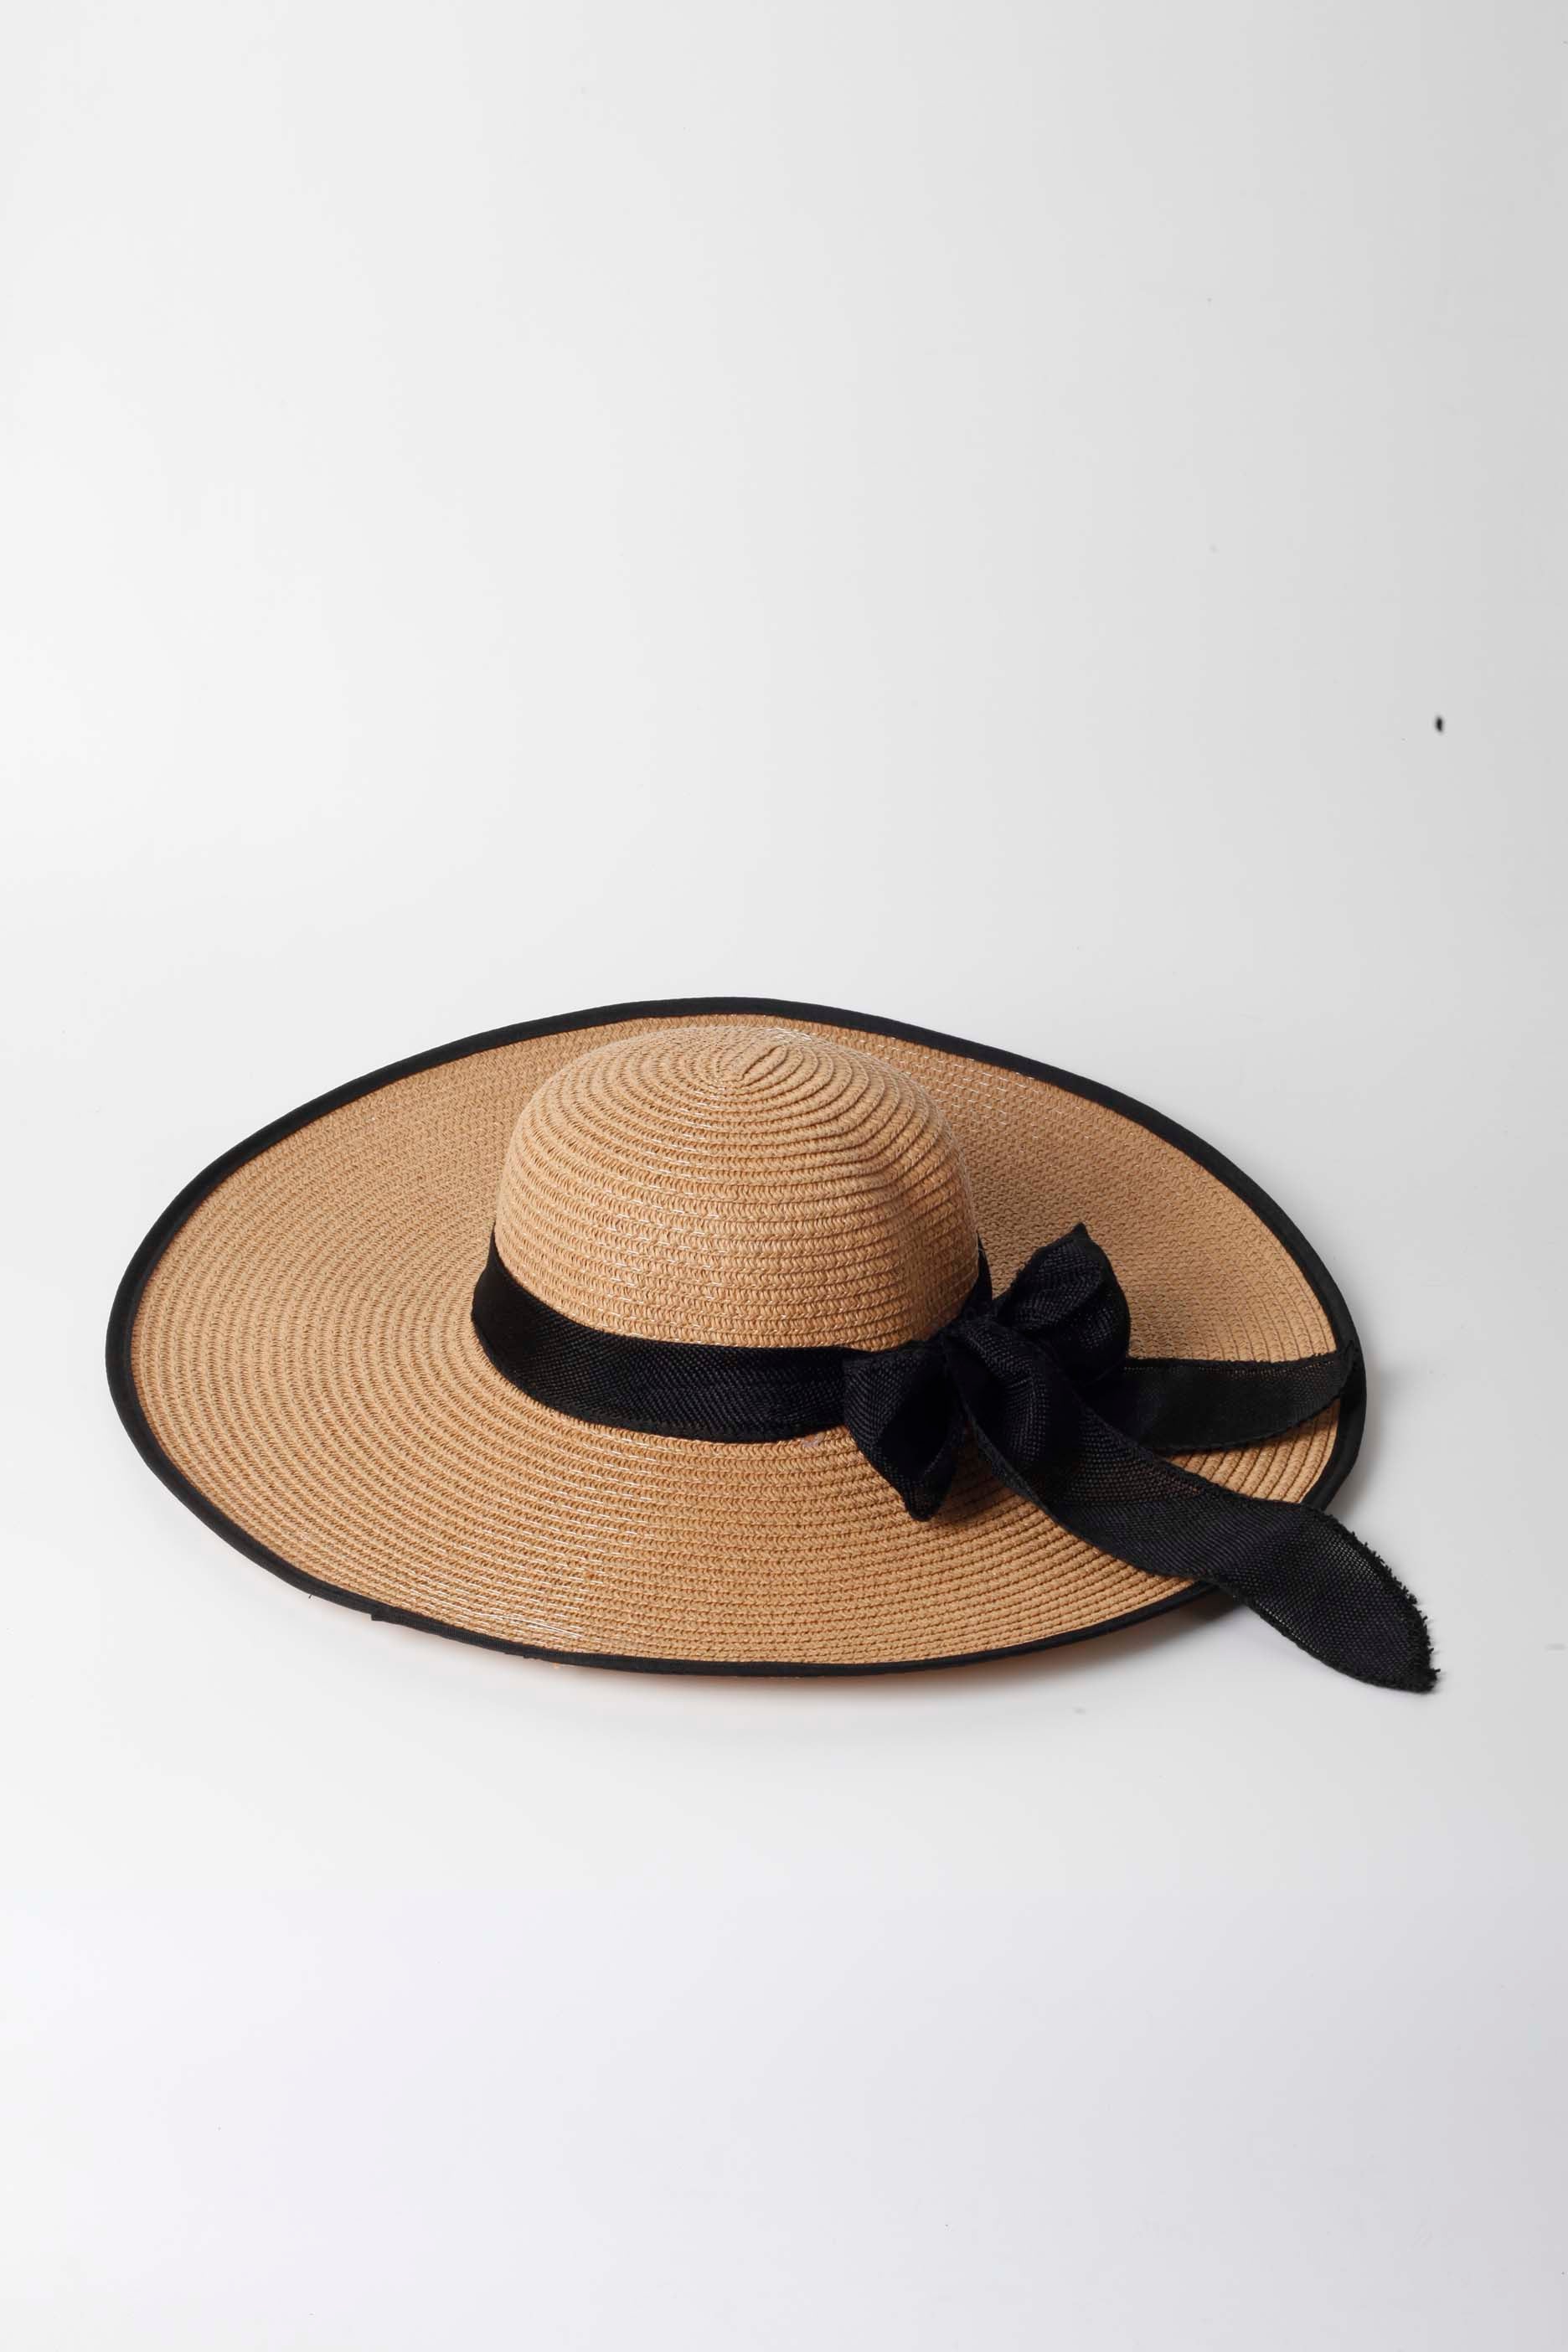 Straw Hat with Black Ribbon